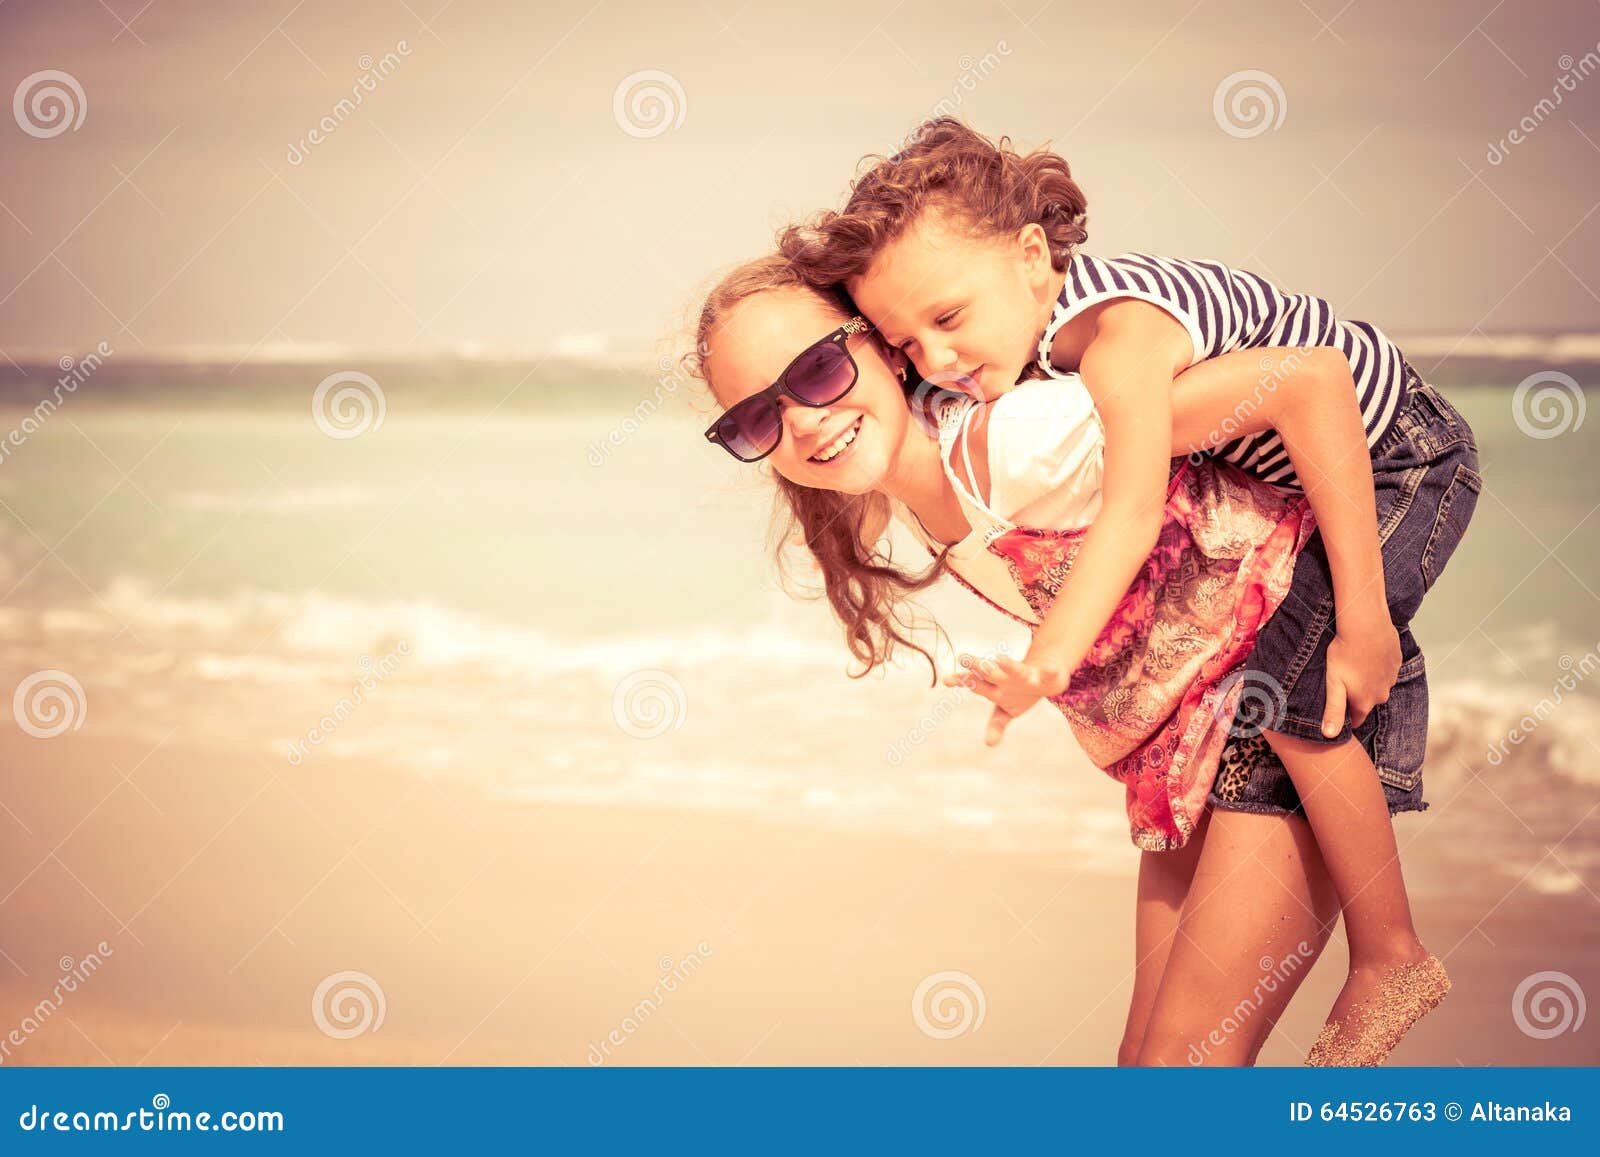 Sister and brother playing. Брат и сестренка на пляже. Старшая и младшая сестра на пляже. Фотосессии брат и сестра на пляже. Фотосессия брат с сестрой детками на море.